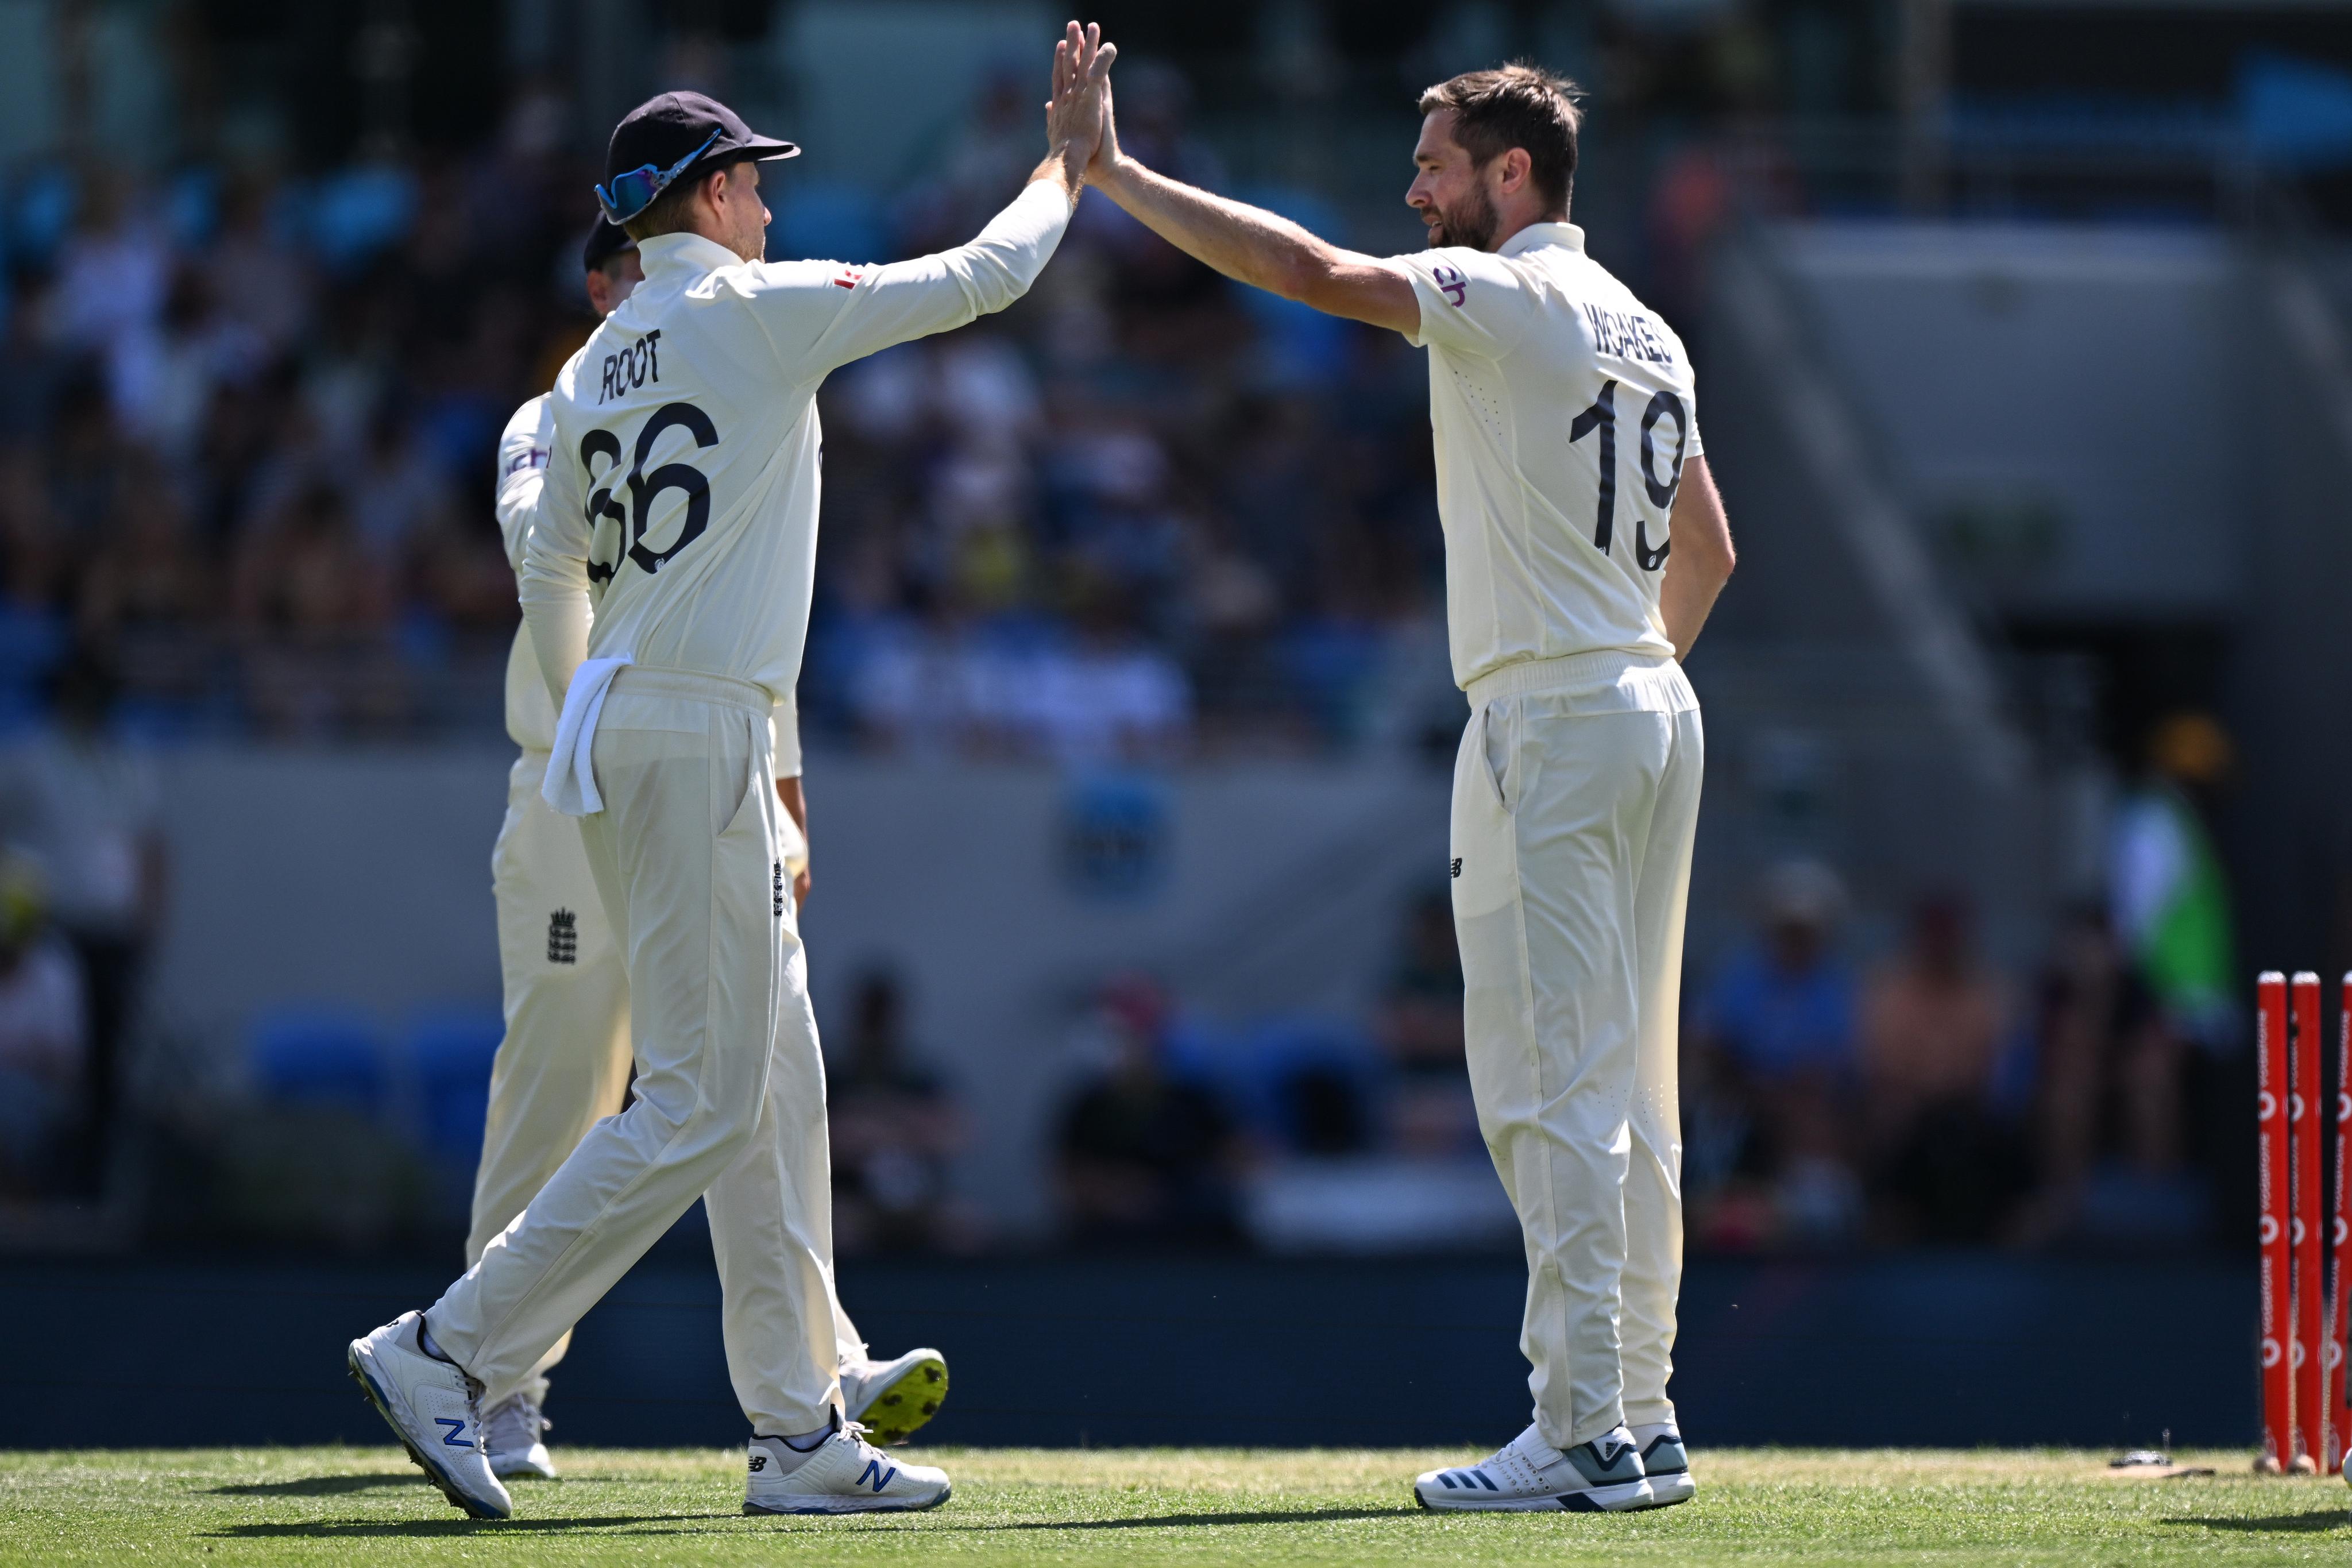 Cricket-England strike late but Australia lead in Hobart